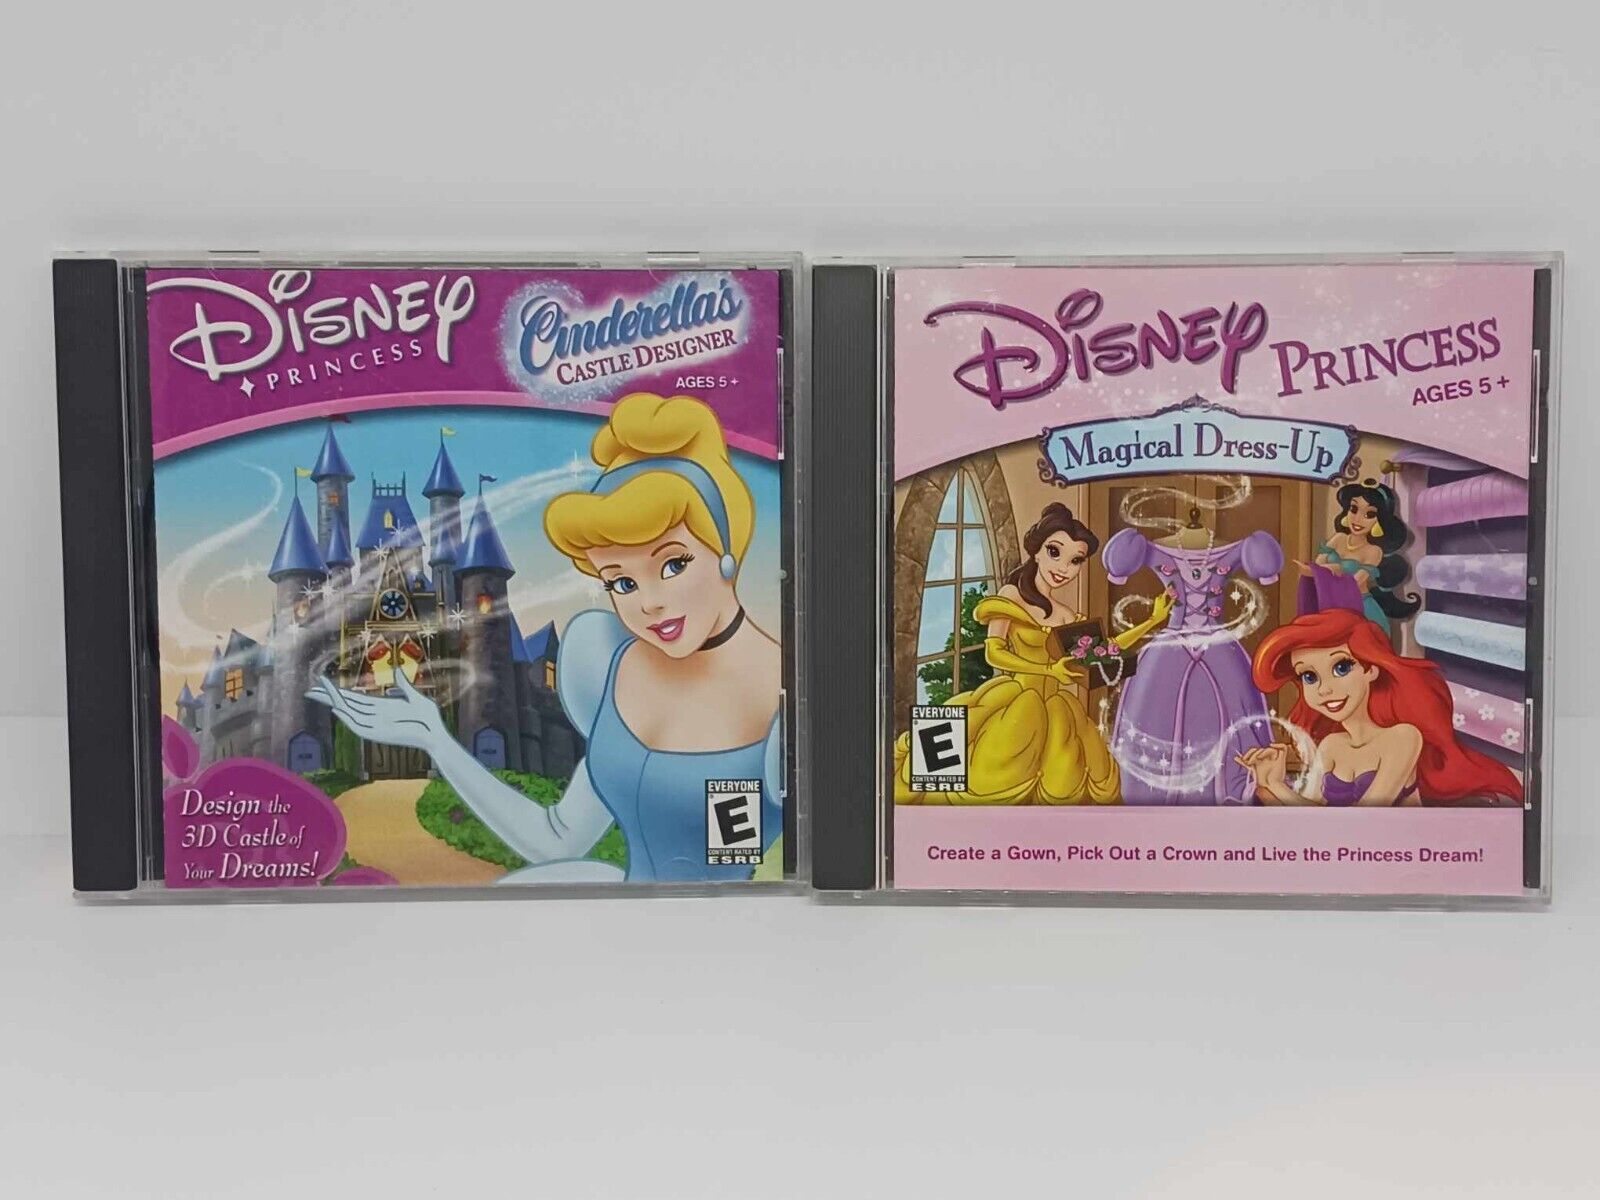 Disney Princess Magical Dress Up and Cinderella's Castle Designer CD Rom Bundle